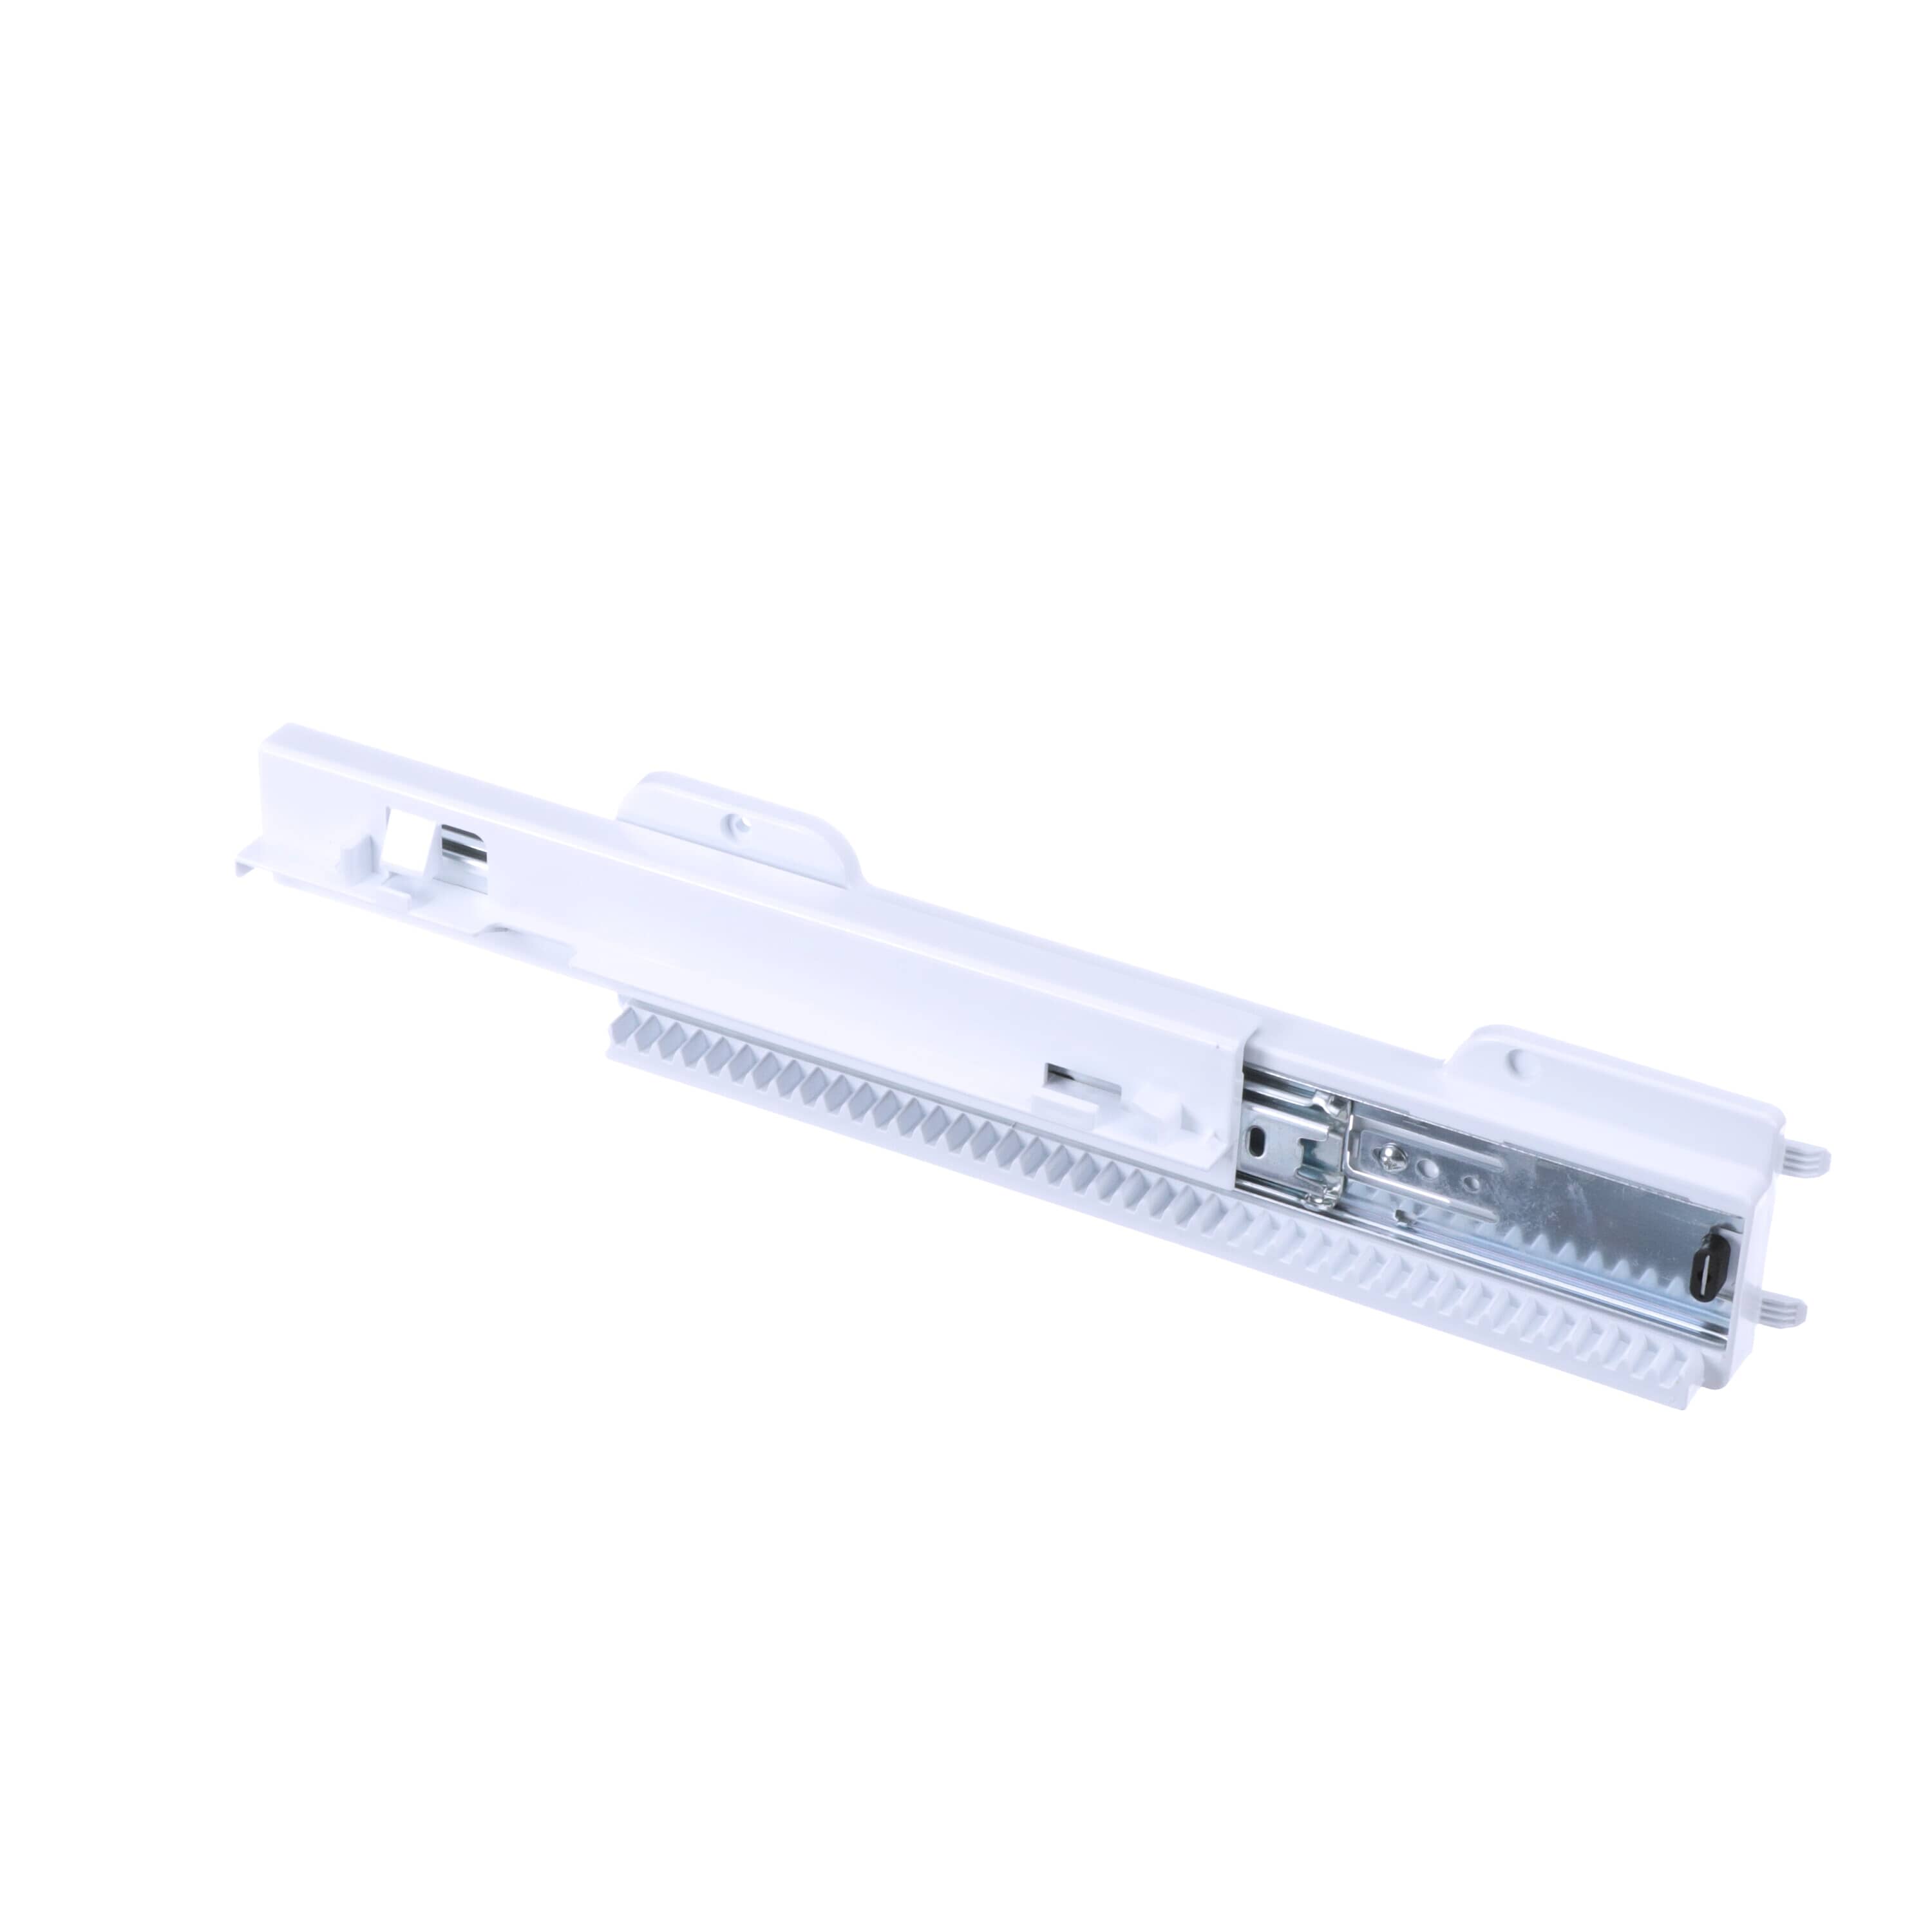 LG AEC73877601 Refrigerator Freezer Tray Slide Rail Assembly